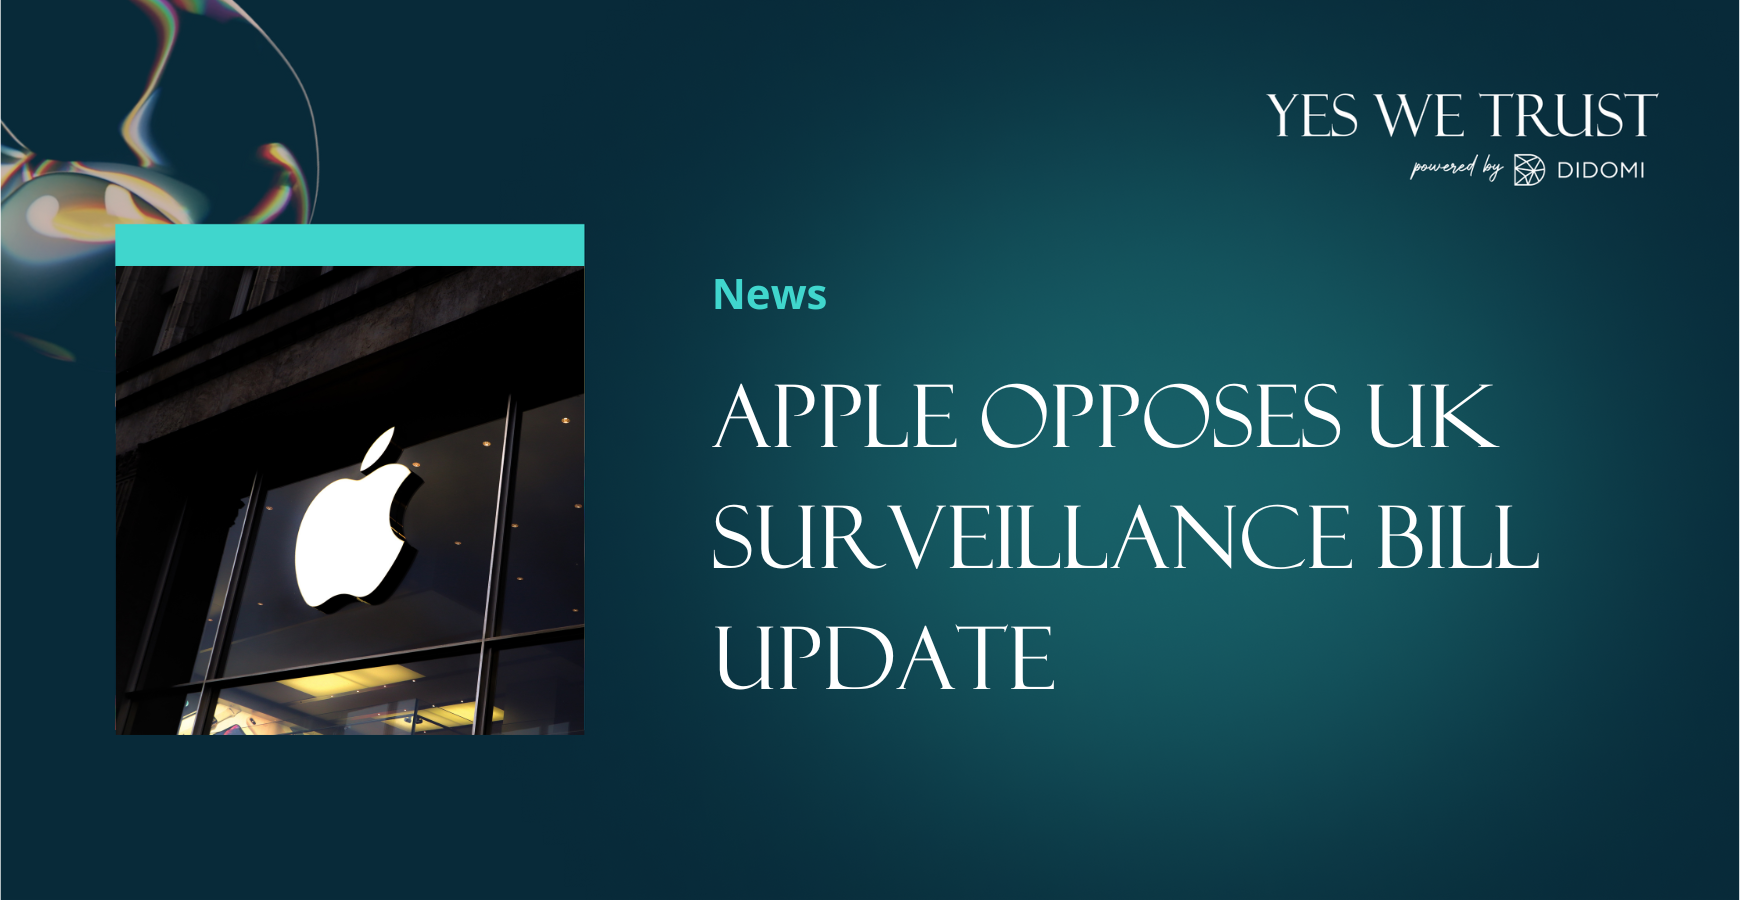 Apple opposes UK surveillance bill update